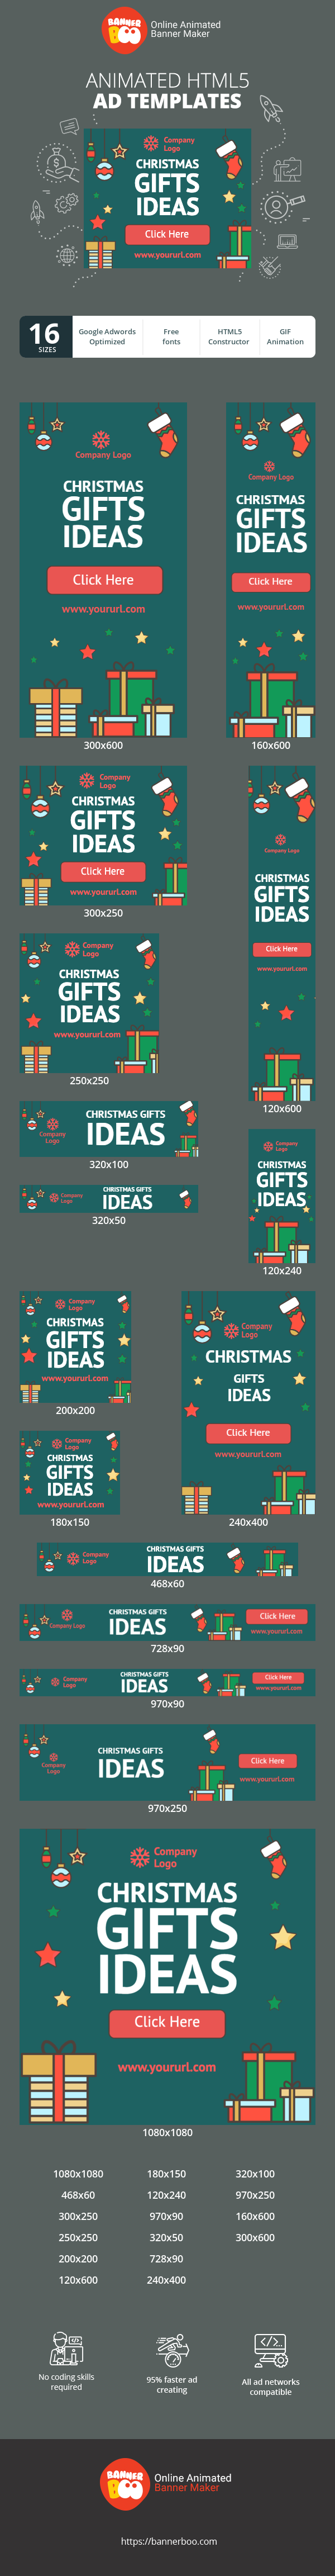 Szablon reklamy banerowej — Christmas Gifts Ideas